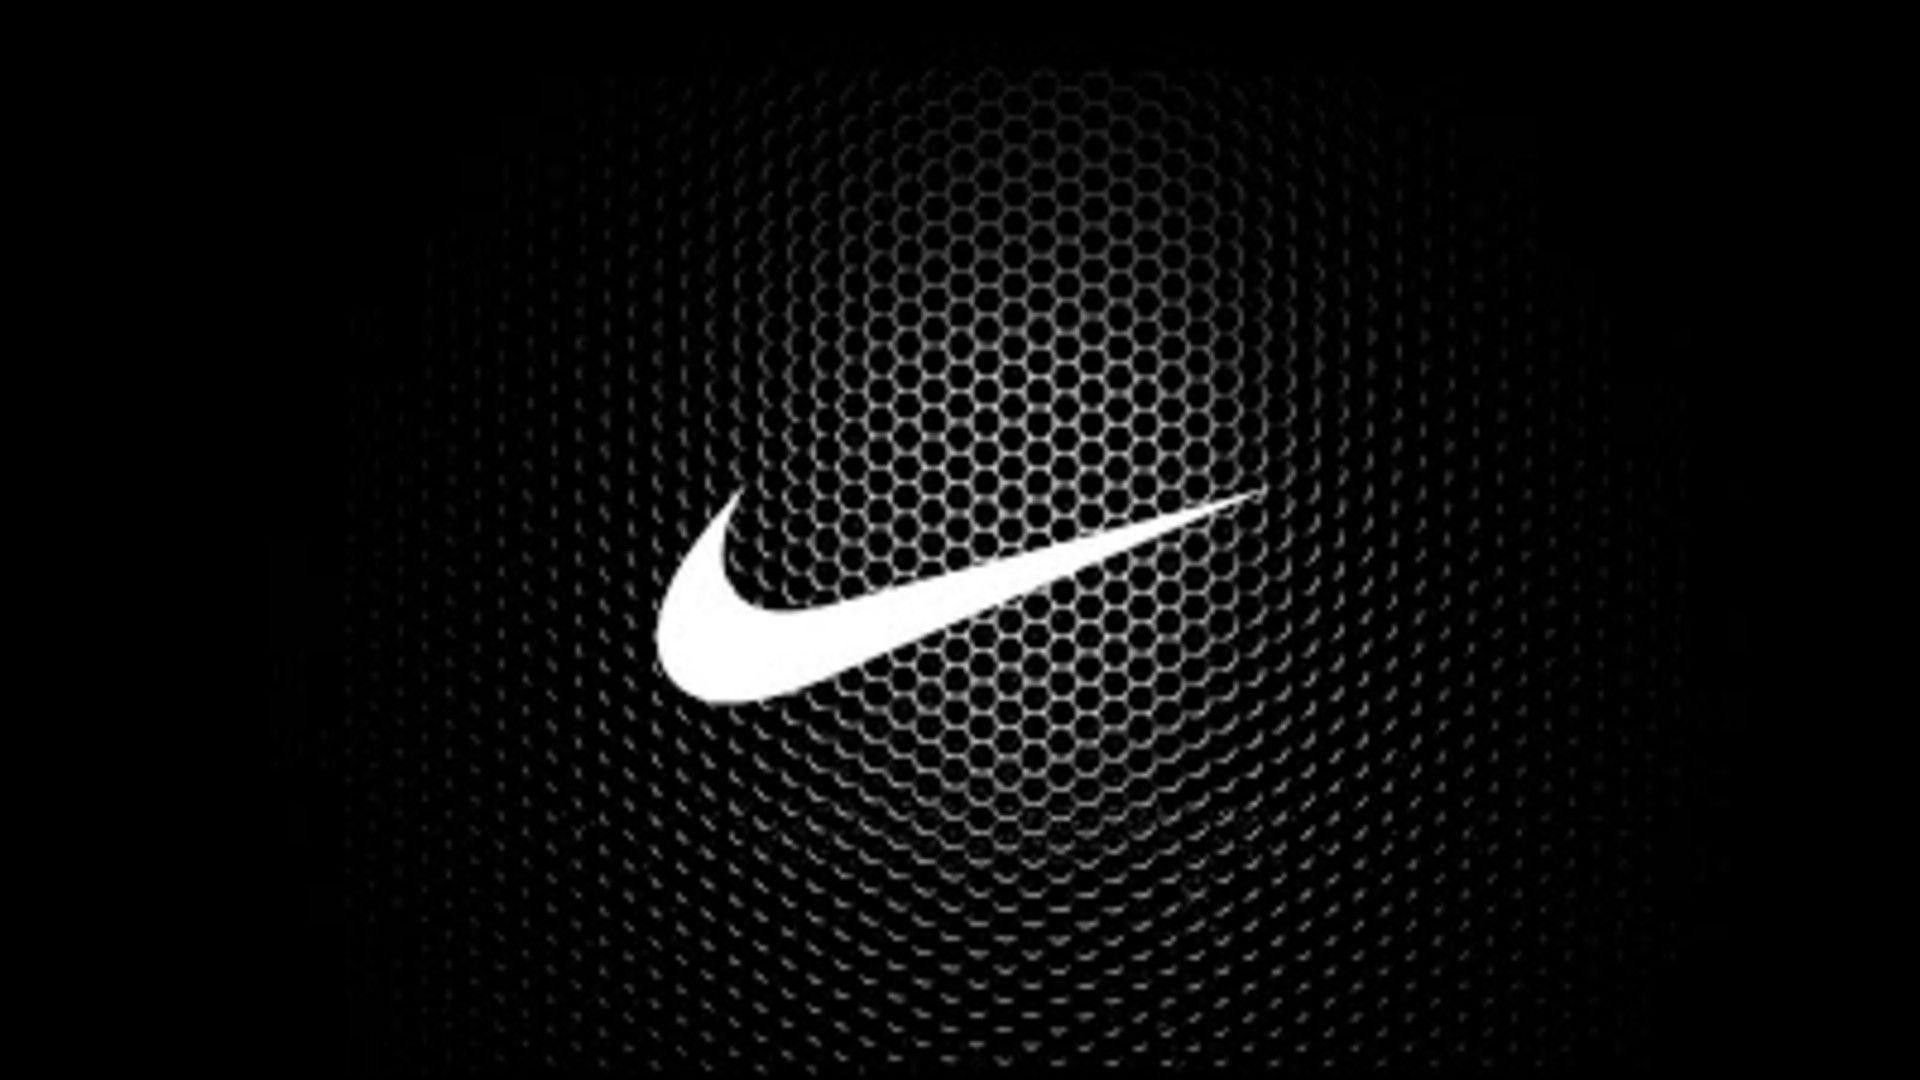 Nike Desktop Wallpapers (70+ images)